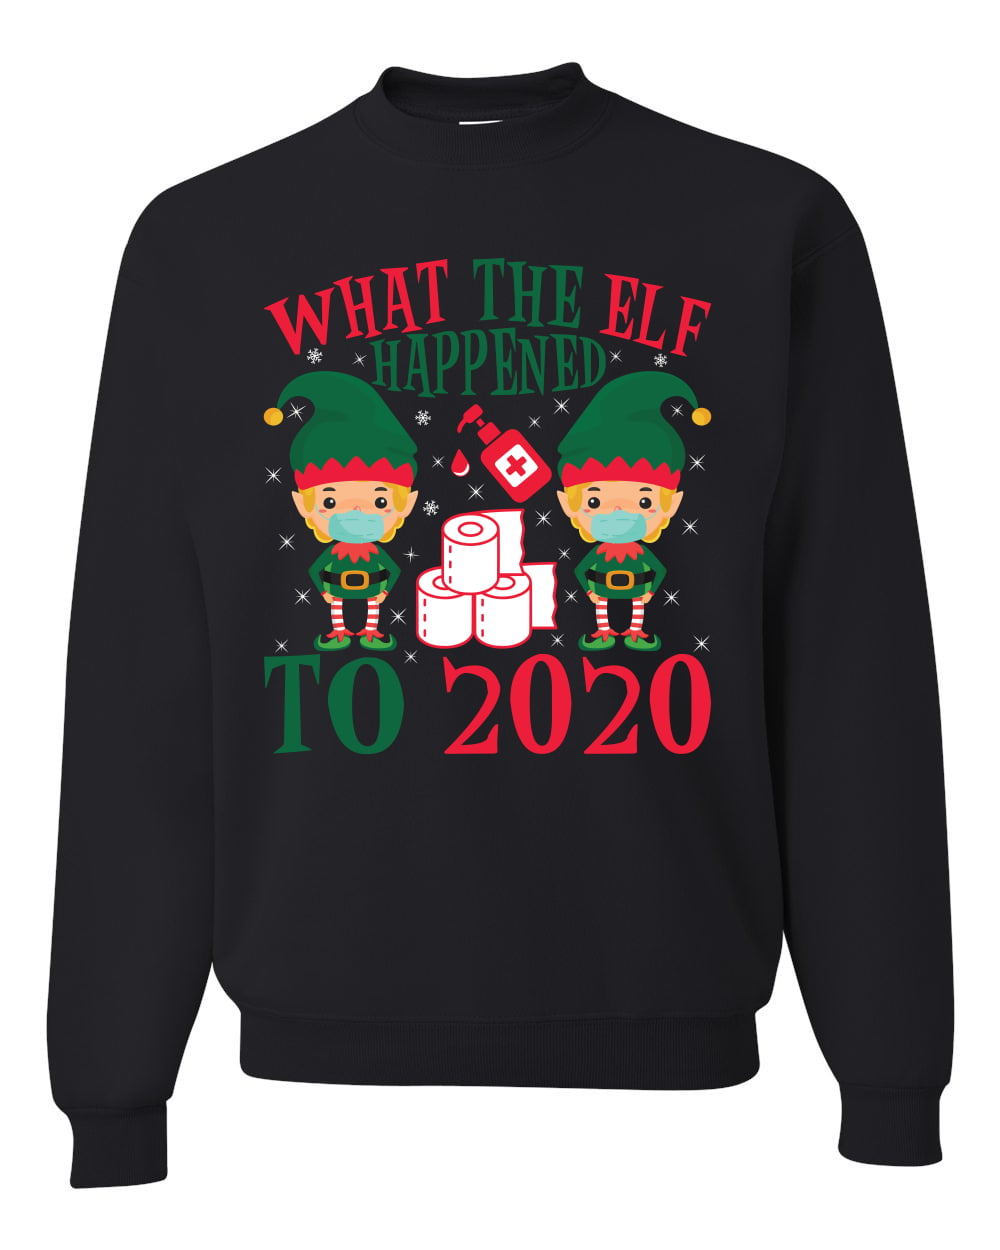 What the Elf Happened 2020 Pandemic Virus Ugly Christmas Sweater Unisex Crewneck Graphic Sweatshirt 